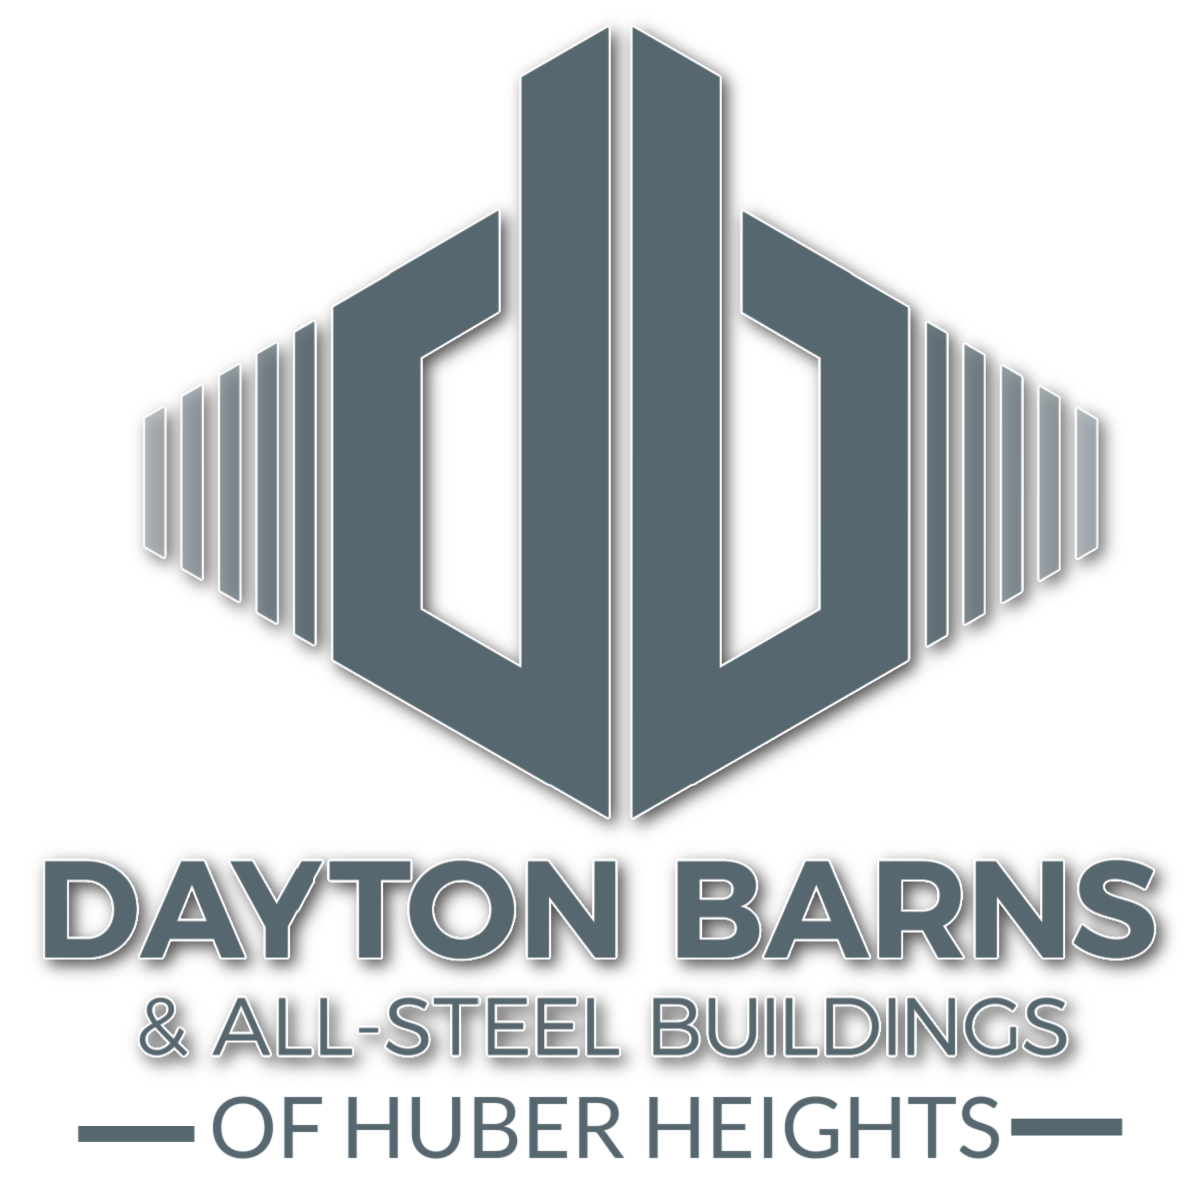 Dayton Barns